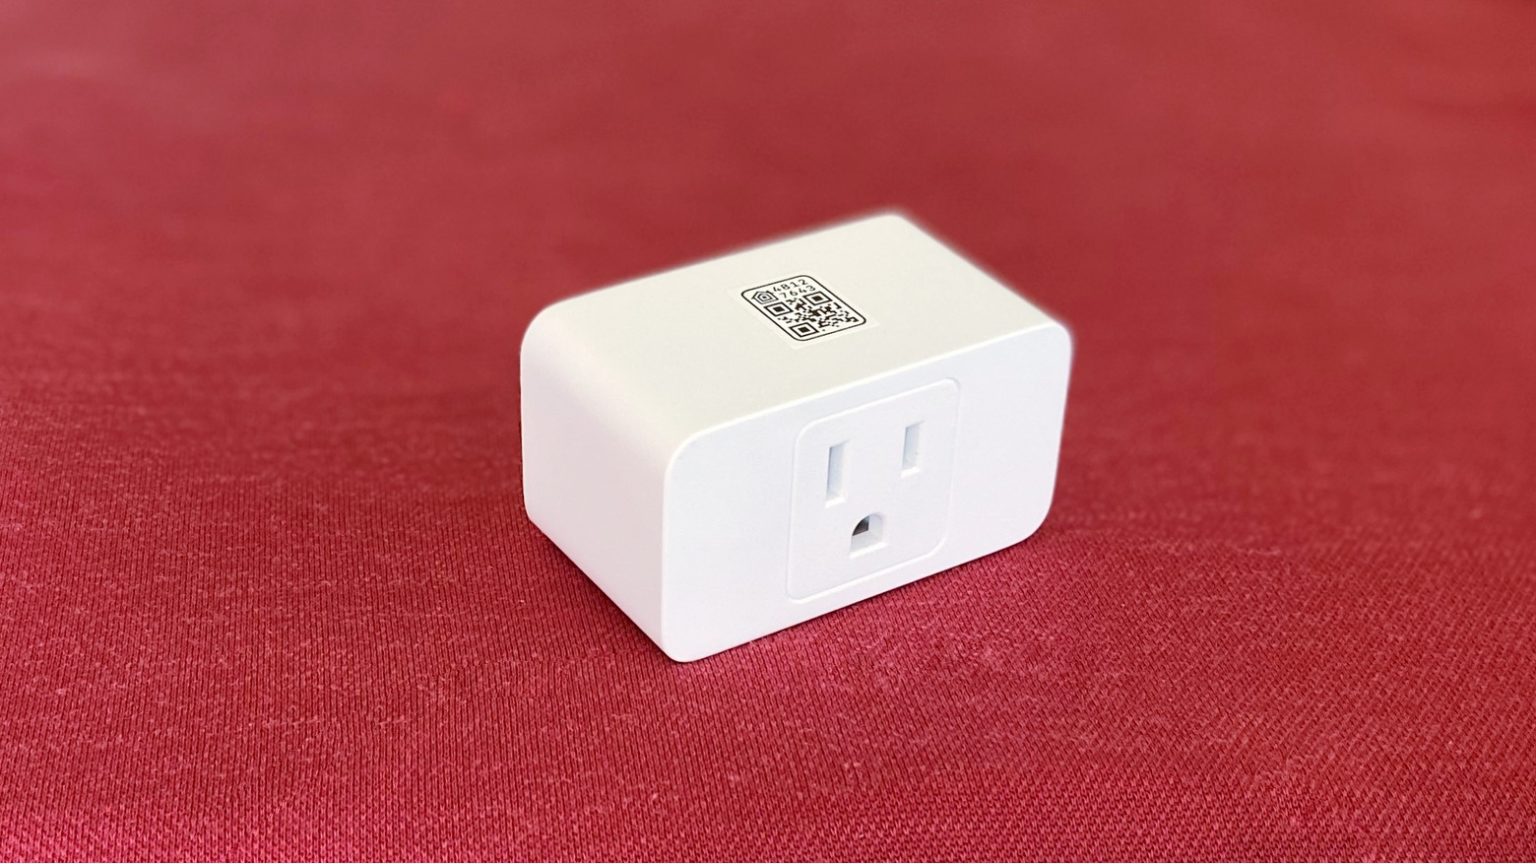 Meross Smart WiFi Plug Mini review